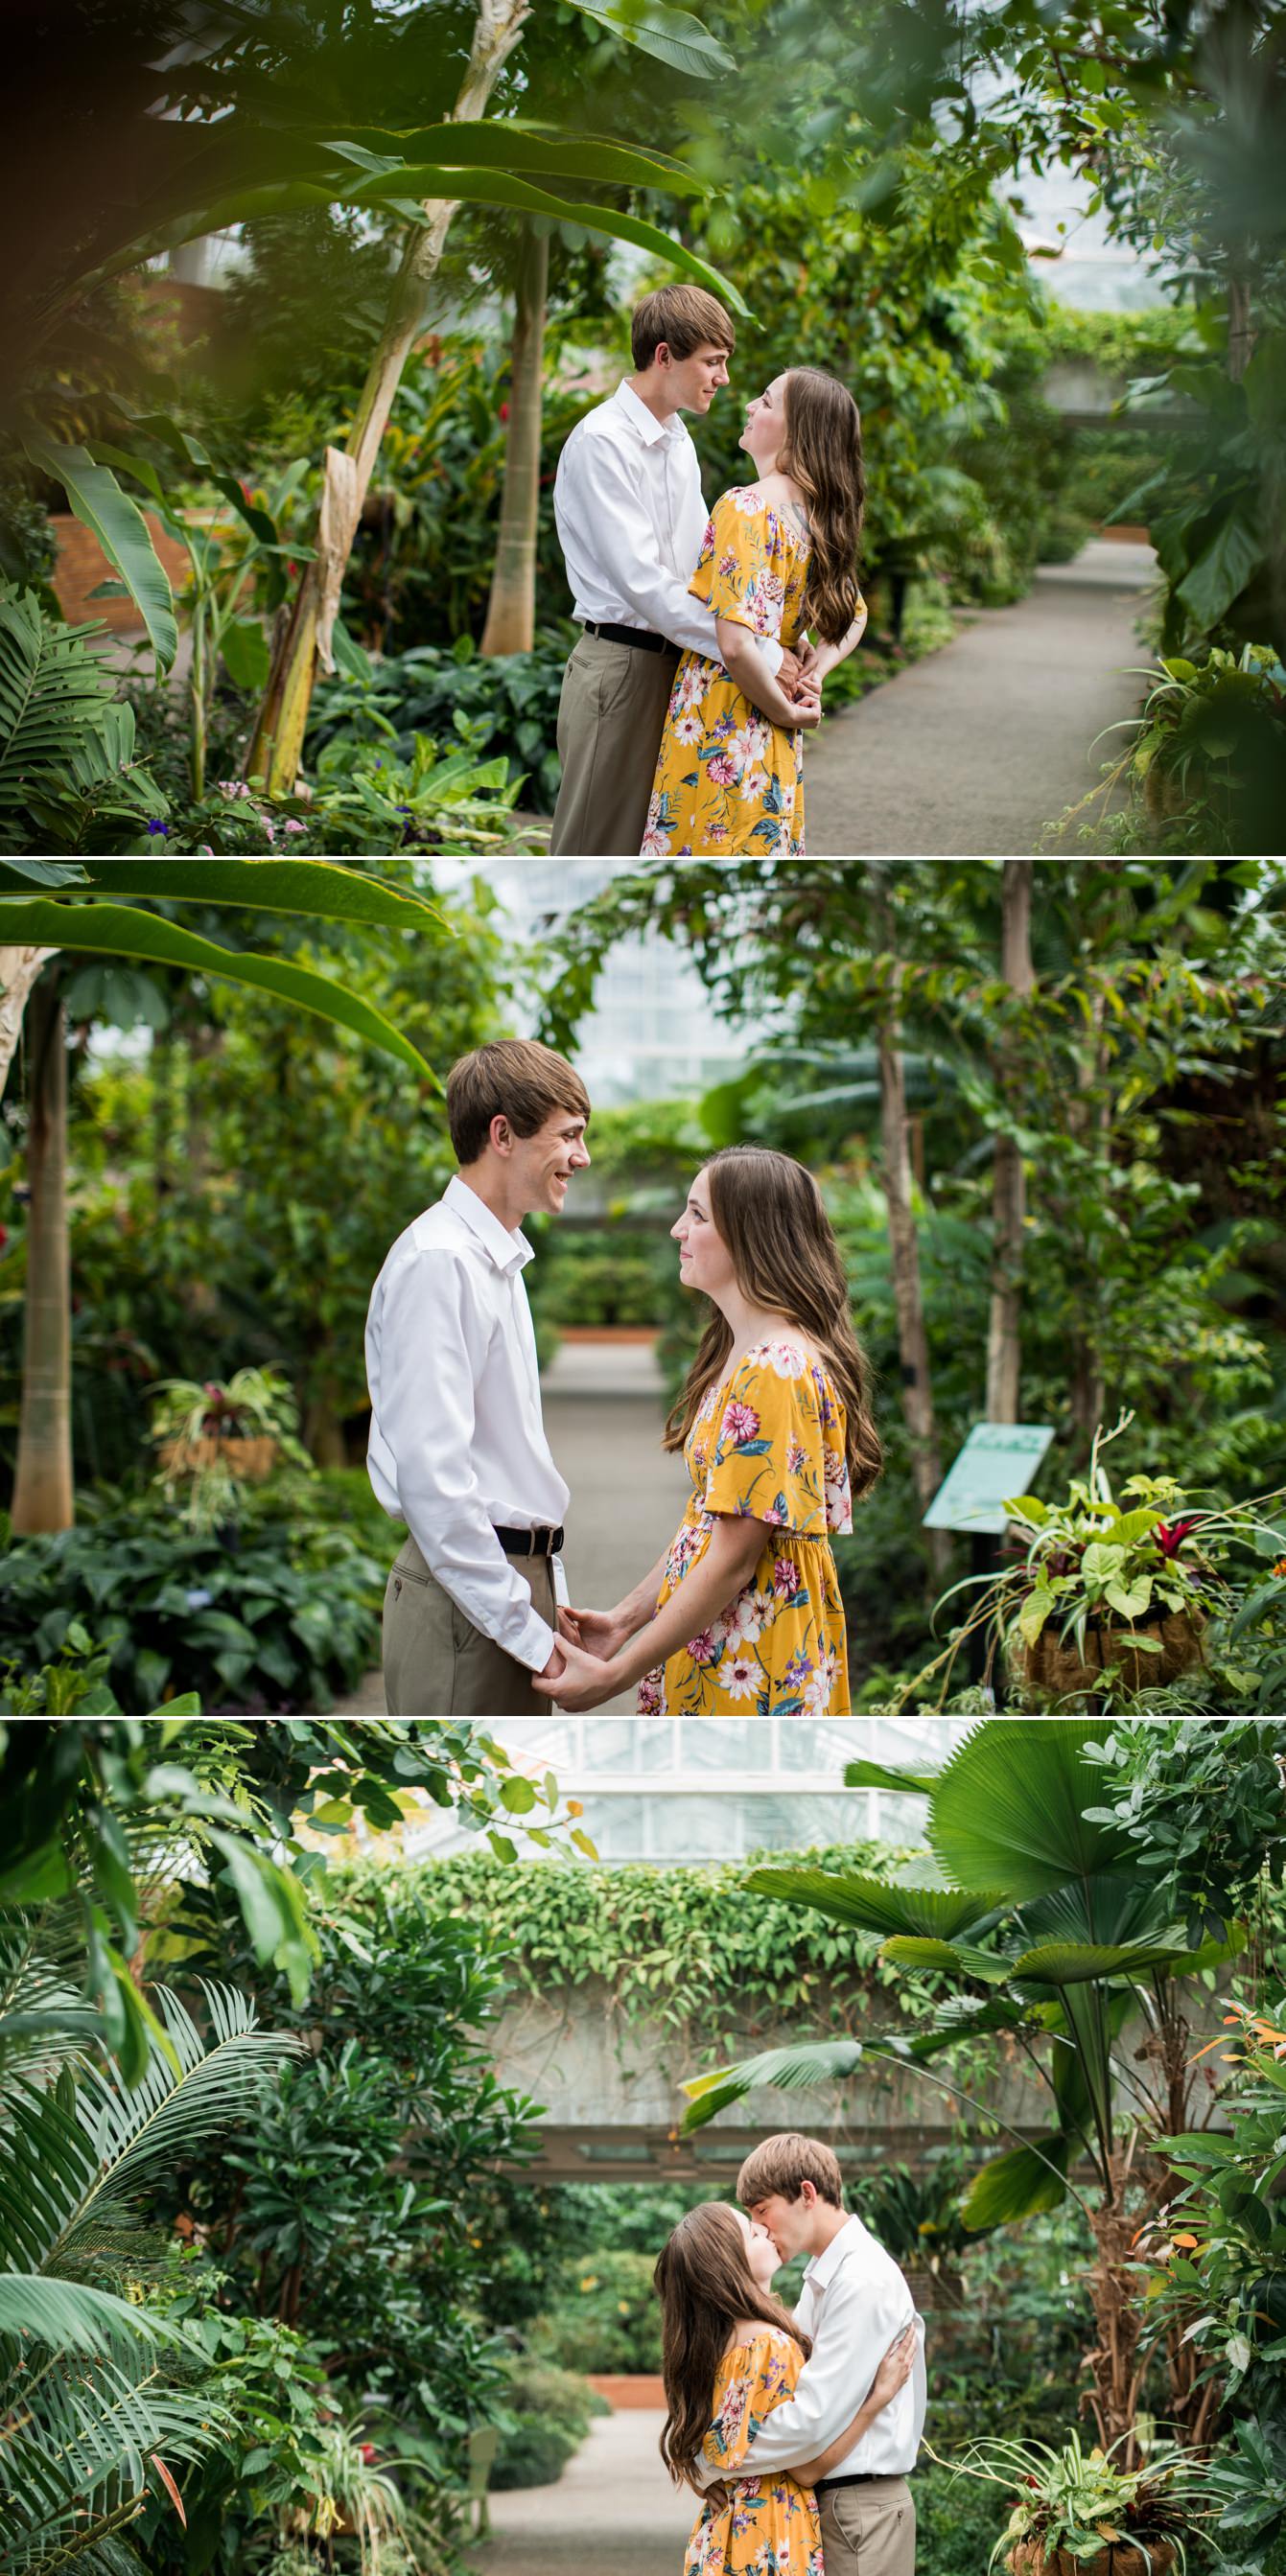 Guy and girl kissing inside the gardens at Matthaei Botanical Gardens in Ann Arbor, Michigan